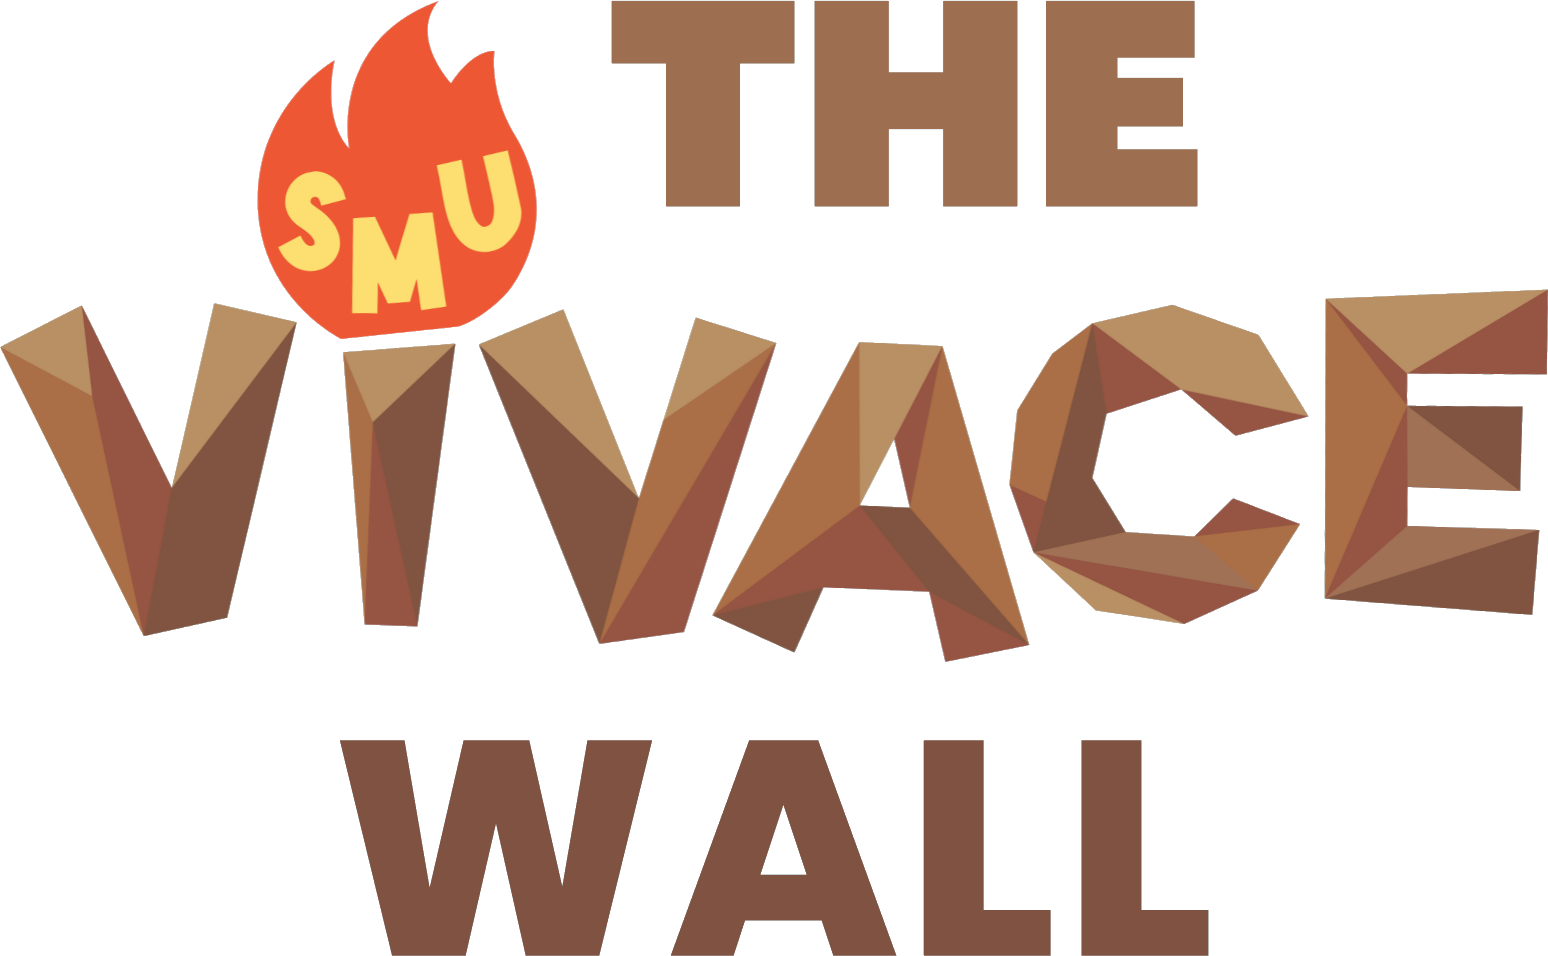 Vivace Wall